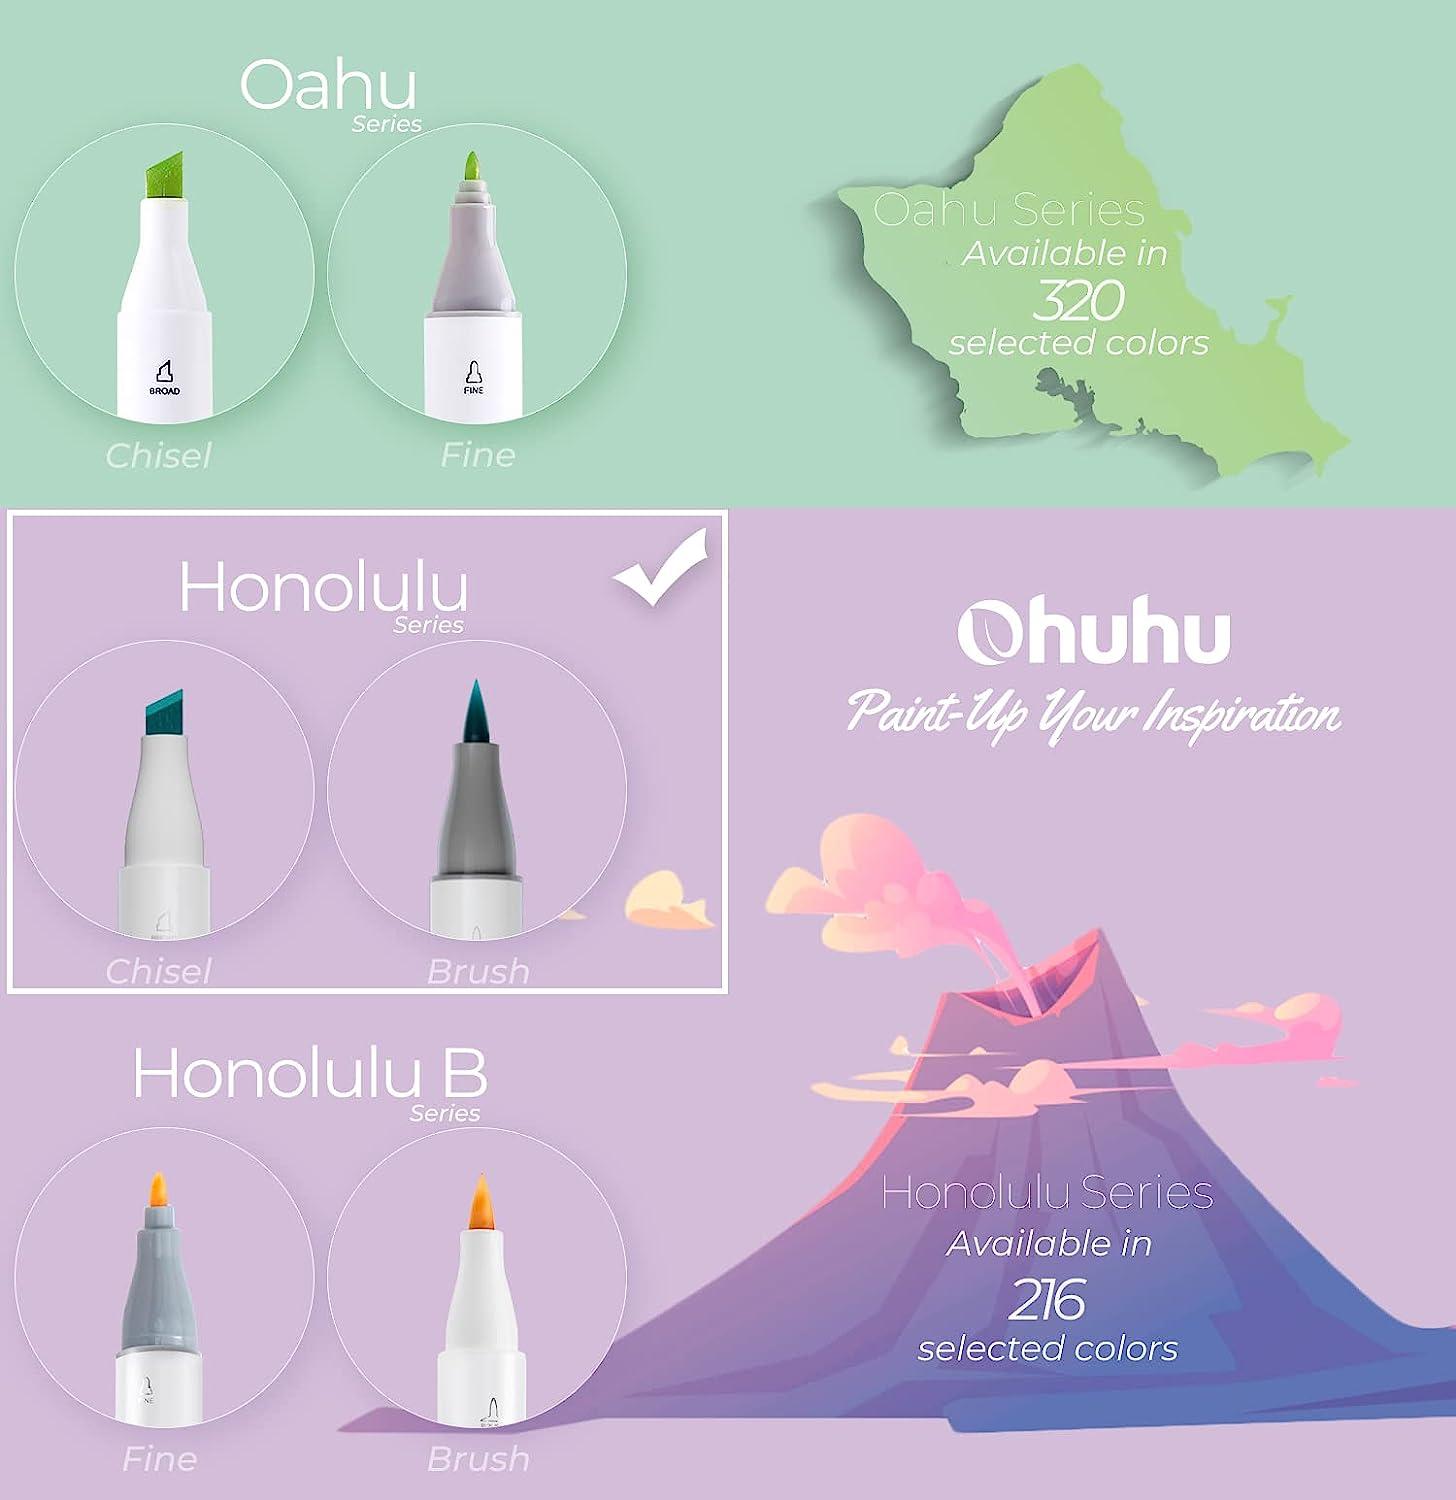 Ohuhu Honolulu 36 Gray Tone Colors Dual Tips Alcohol Art Markers